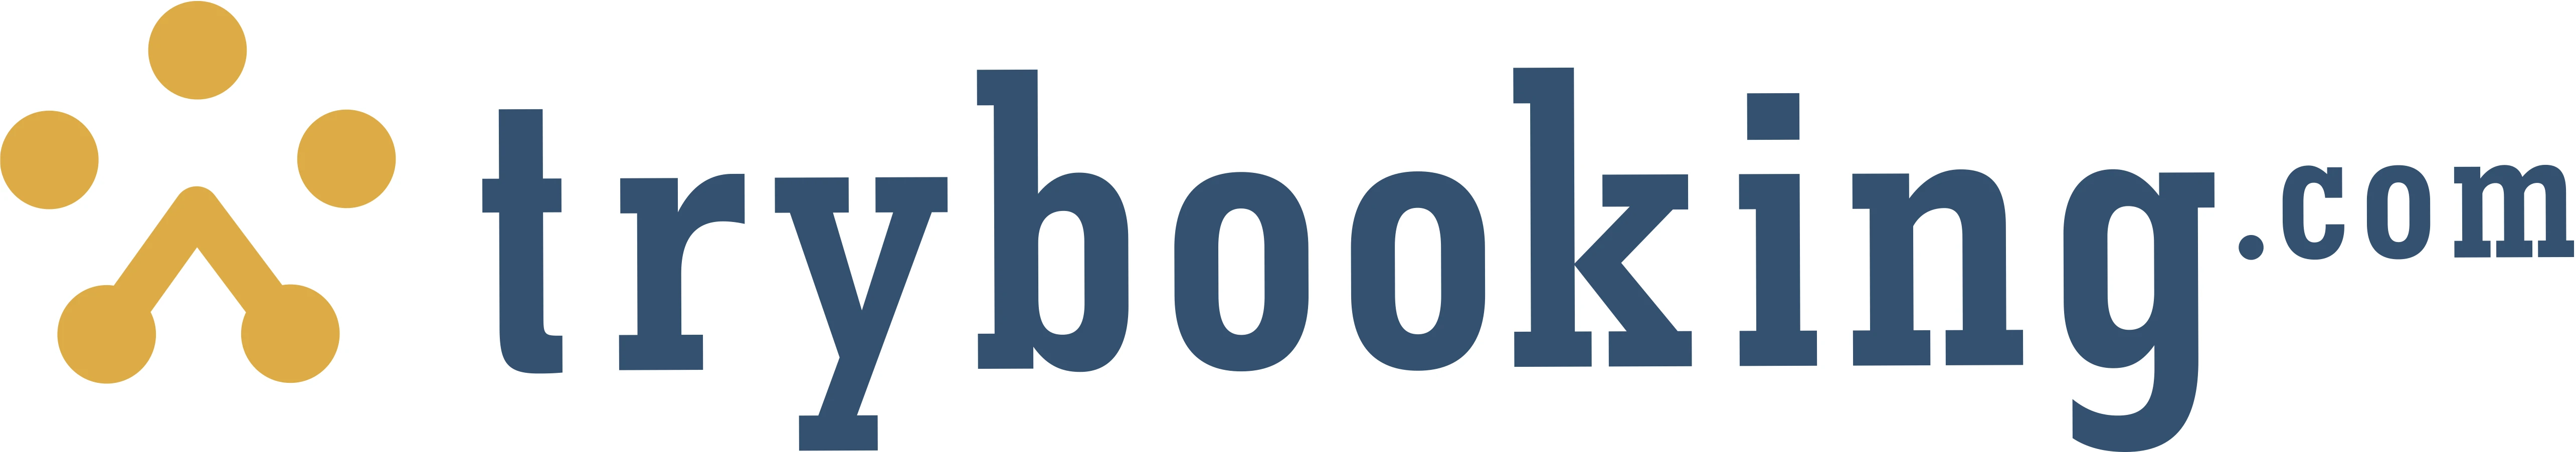 Trybooking.com Logo